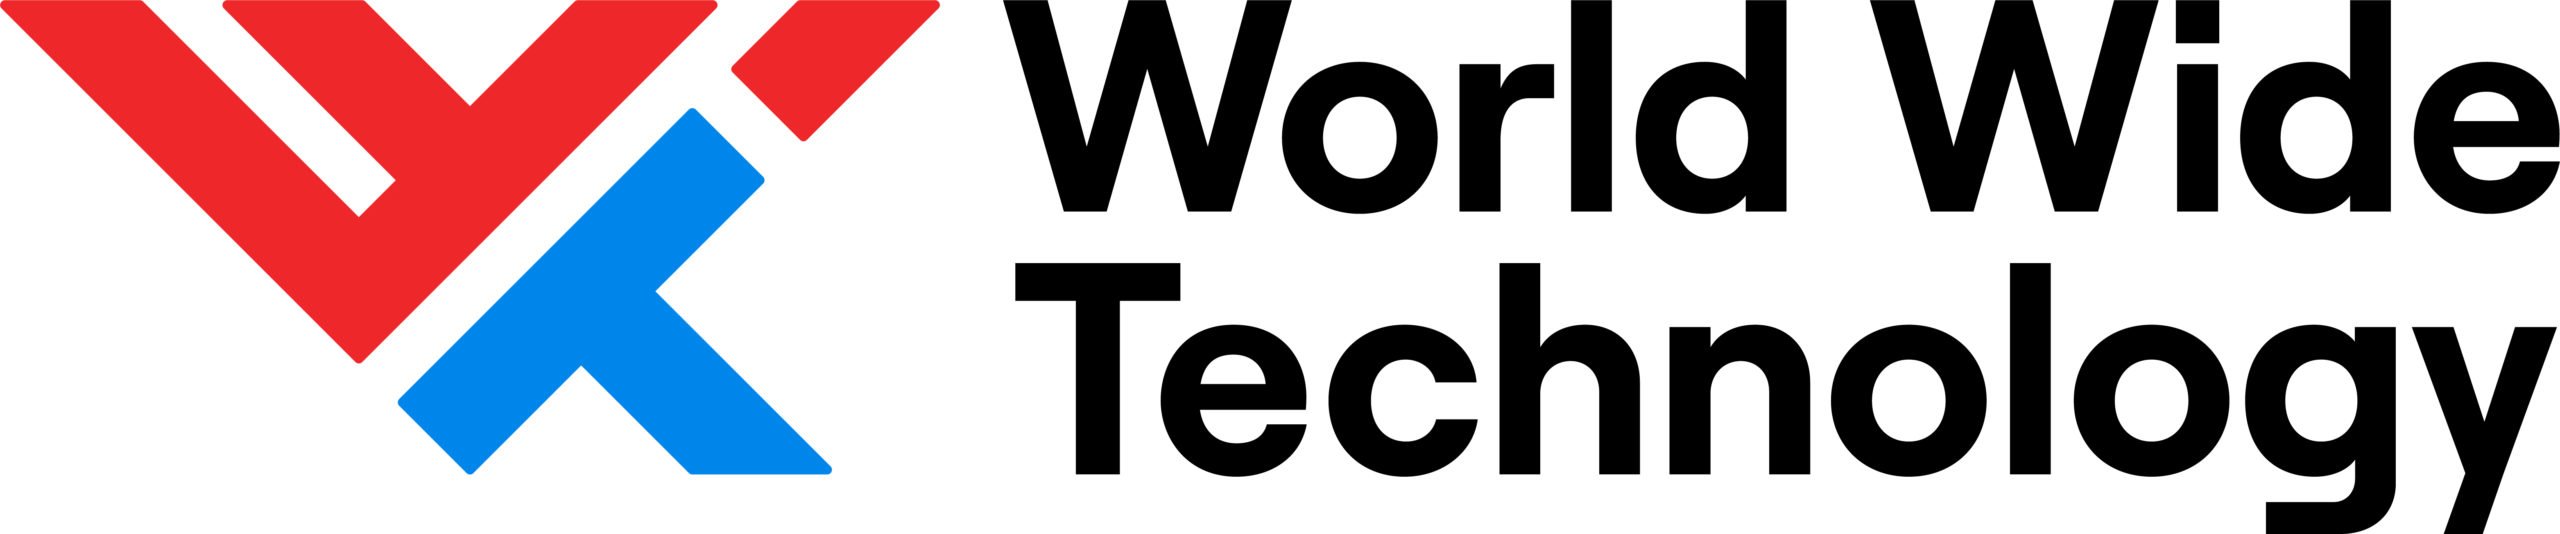 World Wide Technologies logo